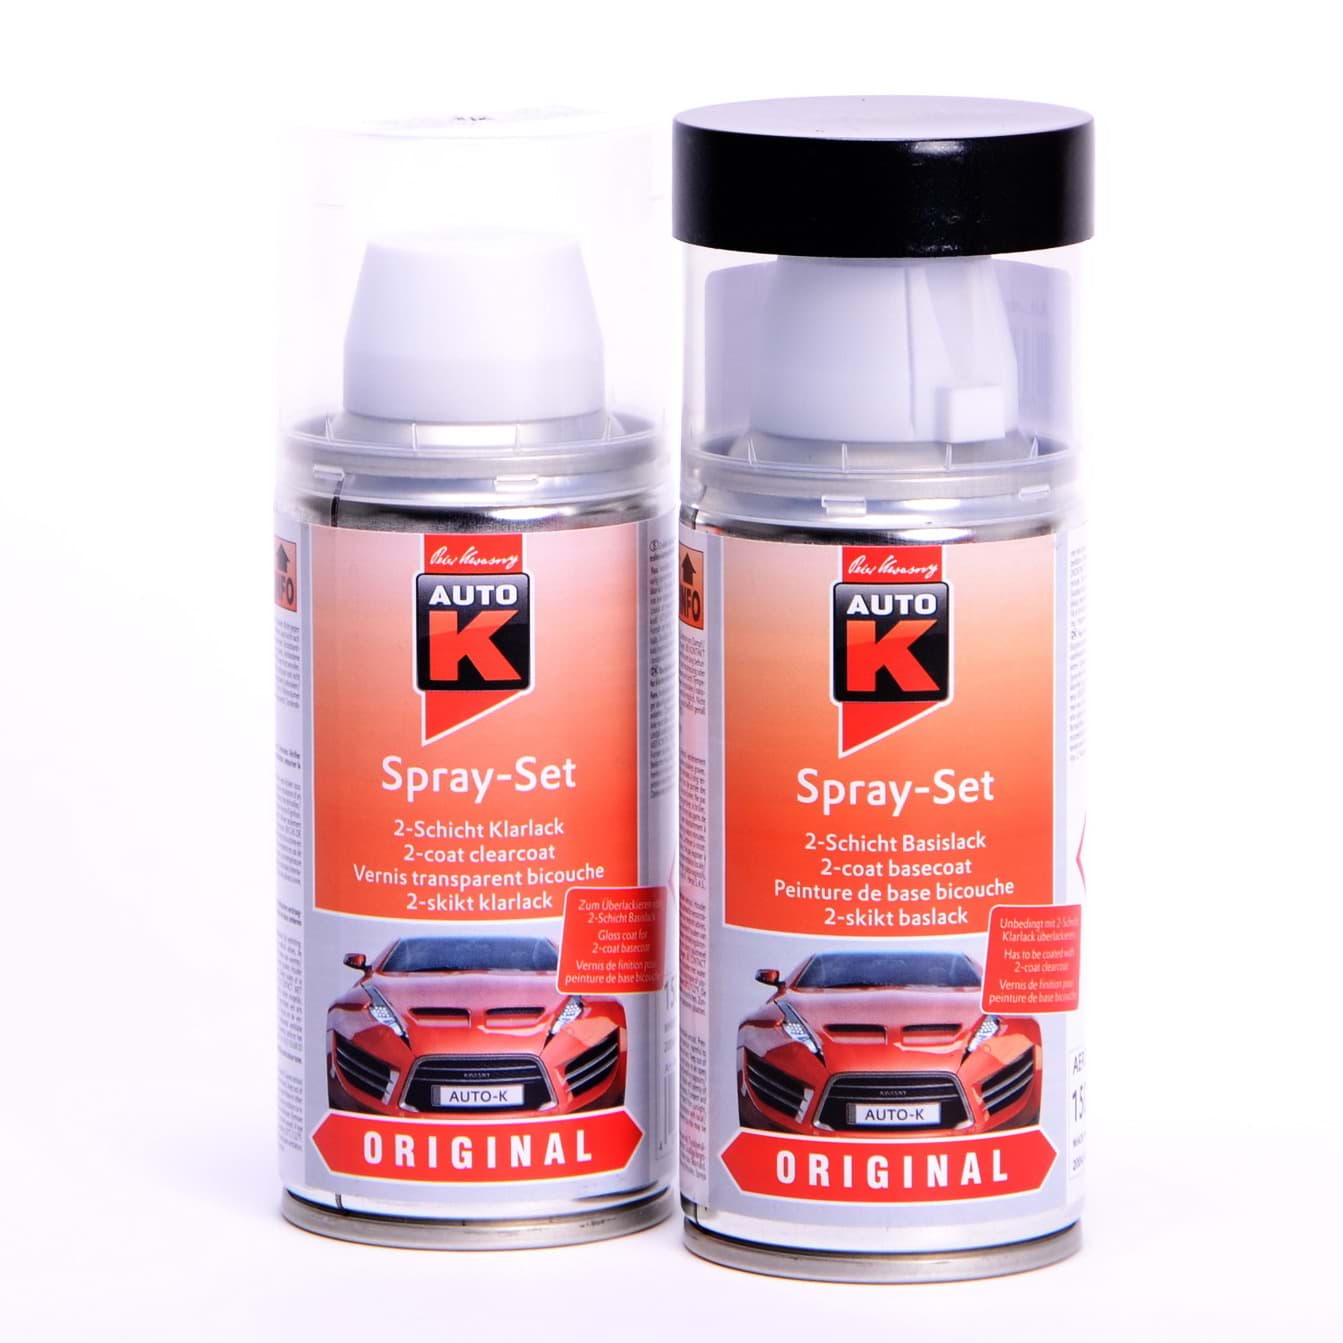 Afbeelding van Auto-K Spray-Set Autolack für Mercedes 755 Tenoritgrau met 23343